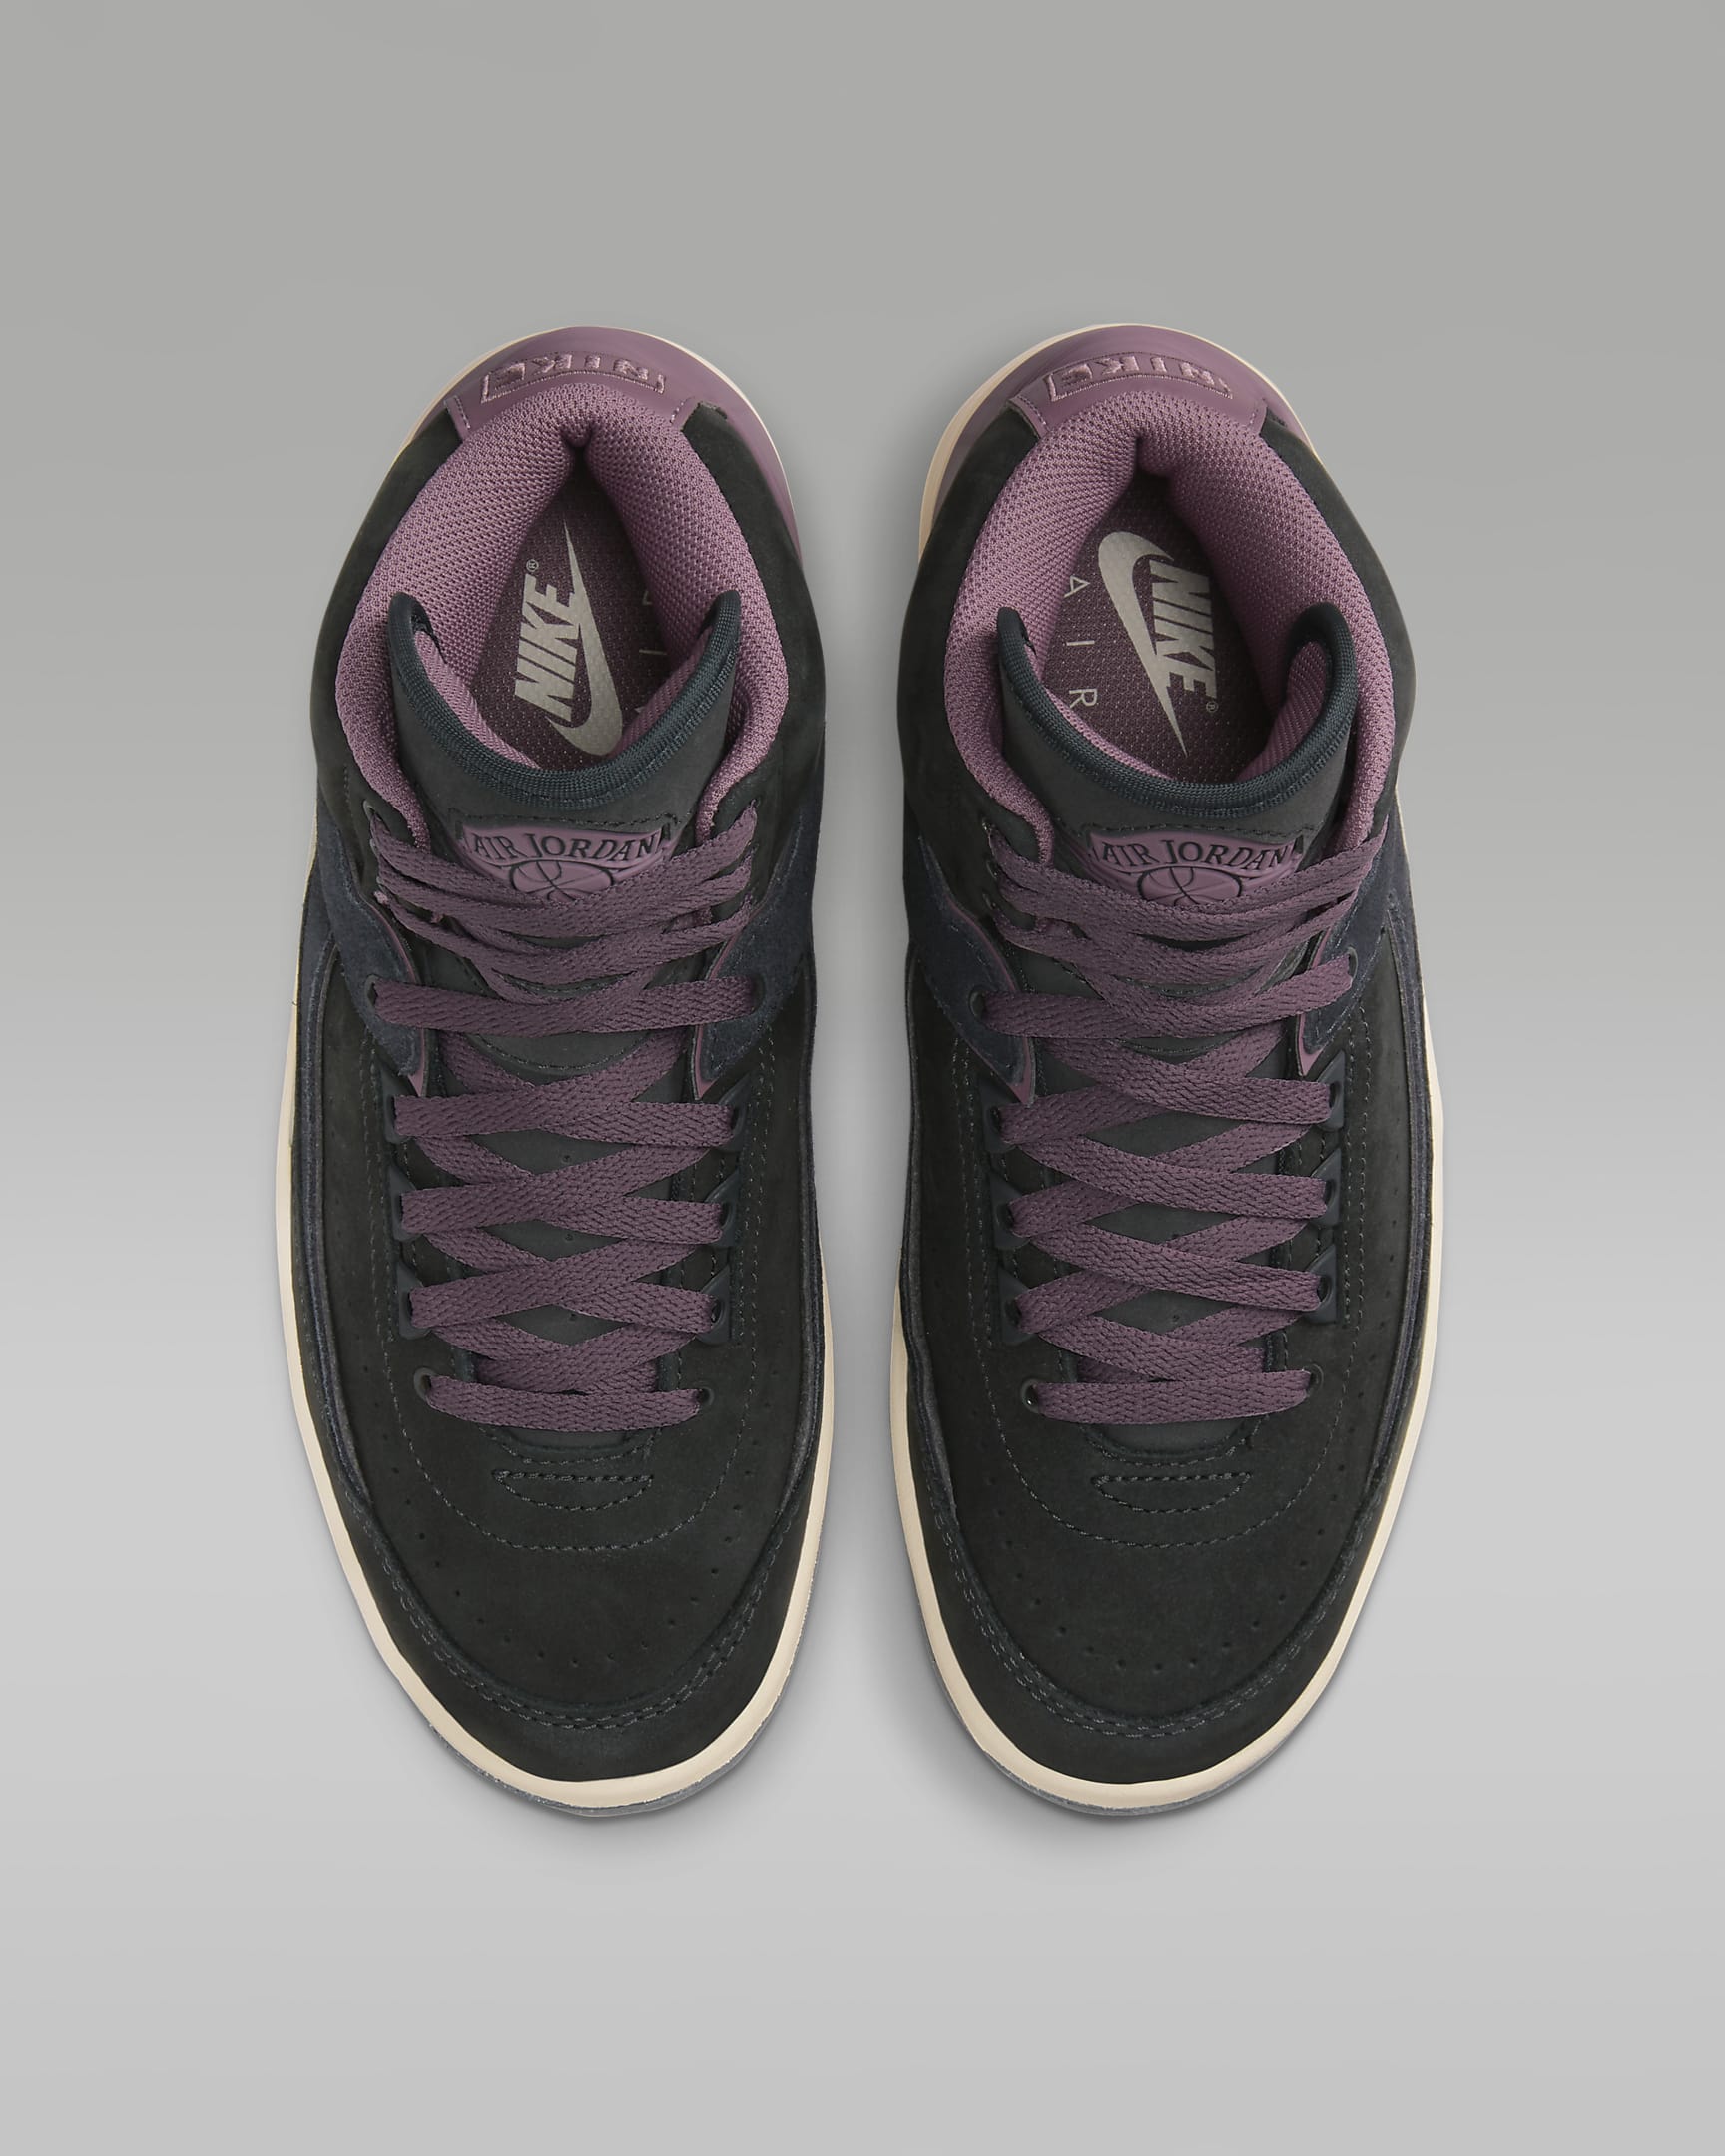 Sneakerheads Rejoice! Air Jordan 2 Retro Women’s Shoes Review Inside!